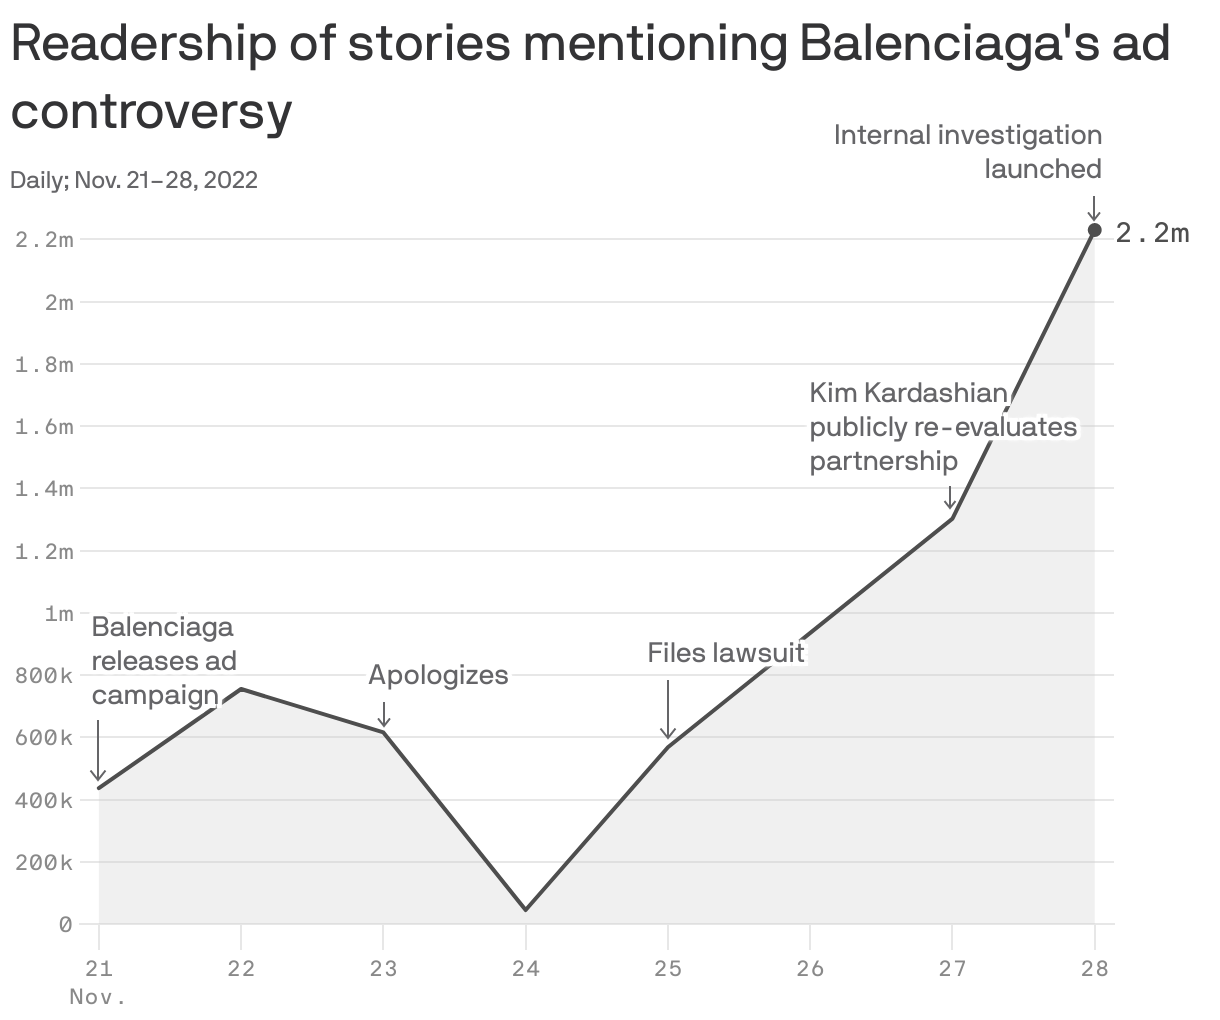 Balenciaga's communication blunder